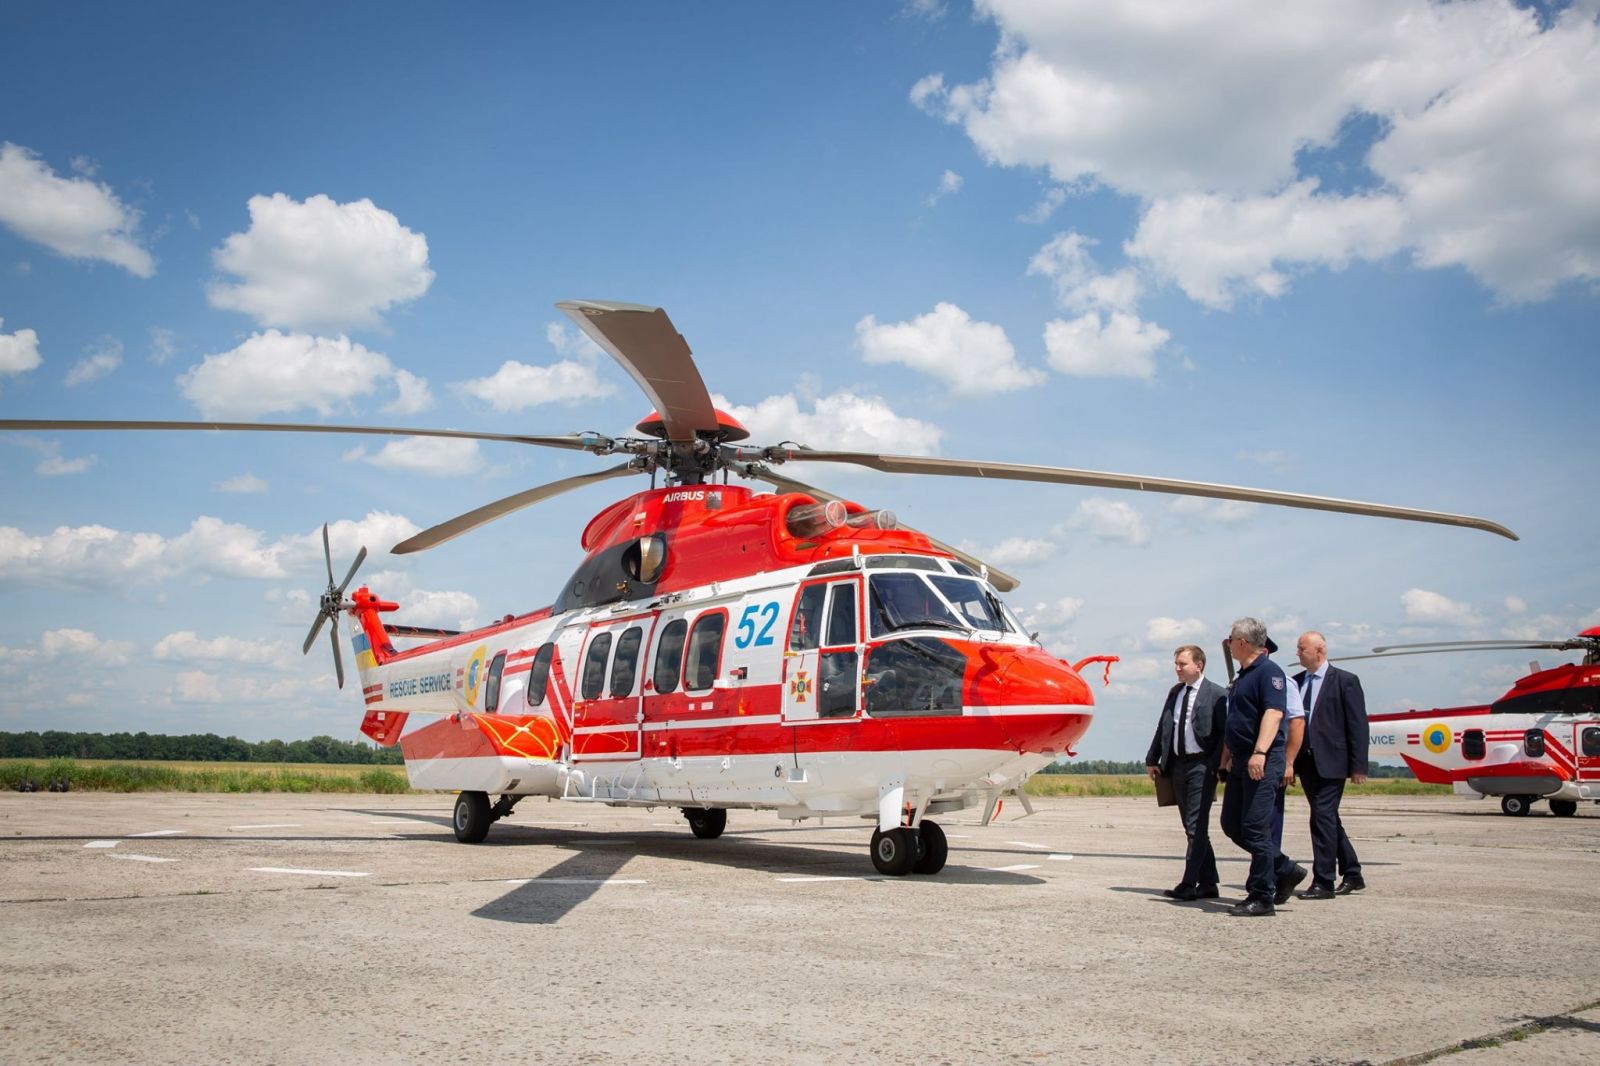 Новости техники: МВД получило из Франции вертолет Super Puma, фото — ГСЧС